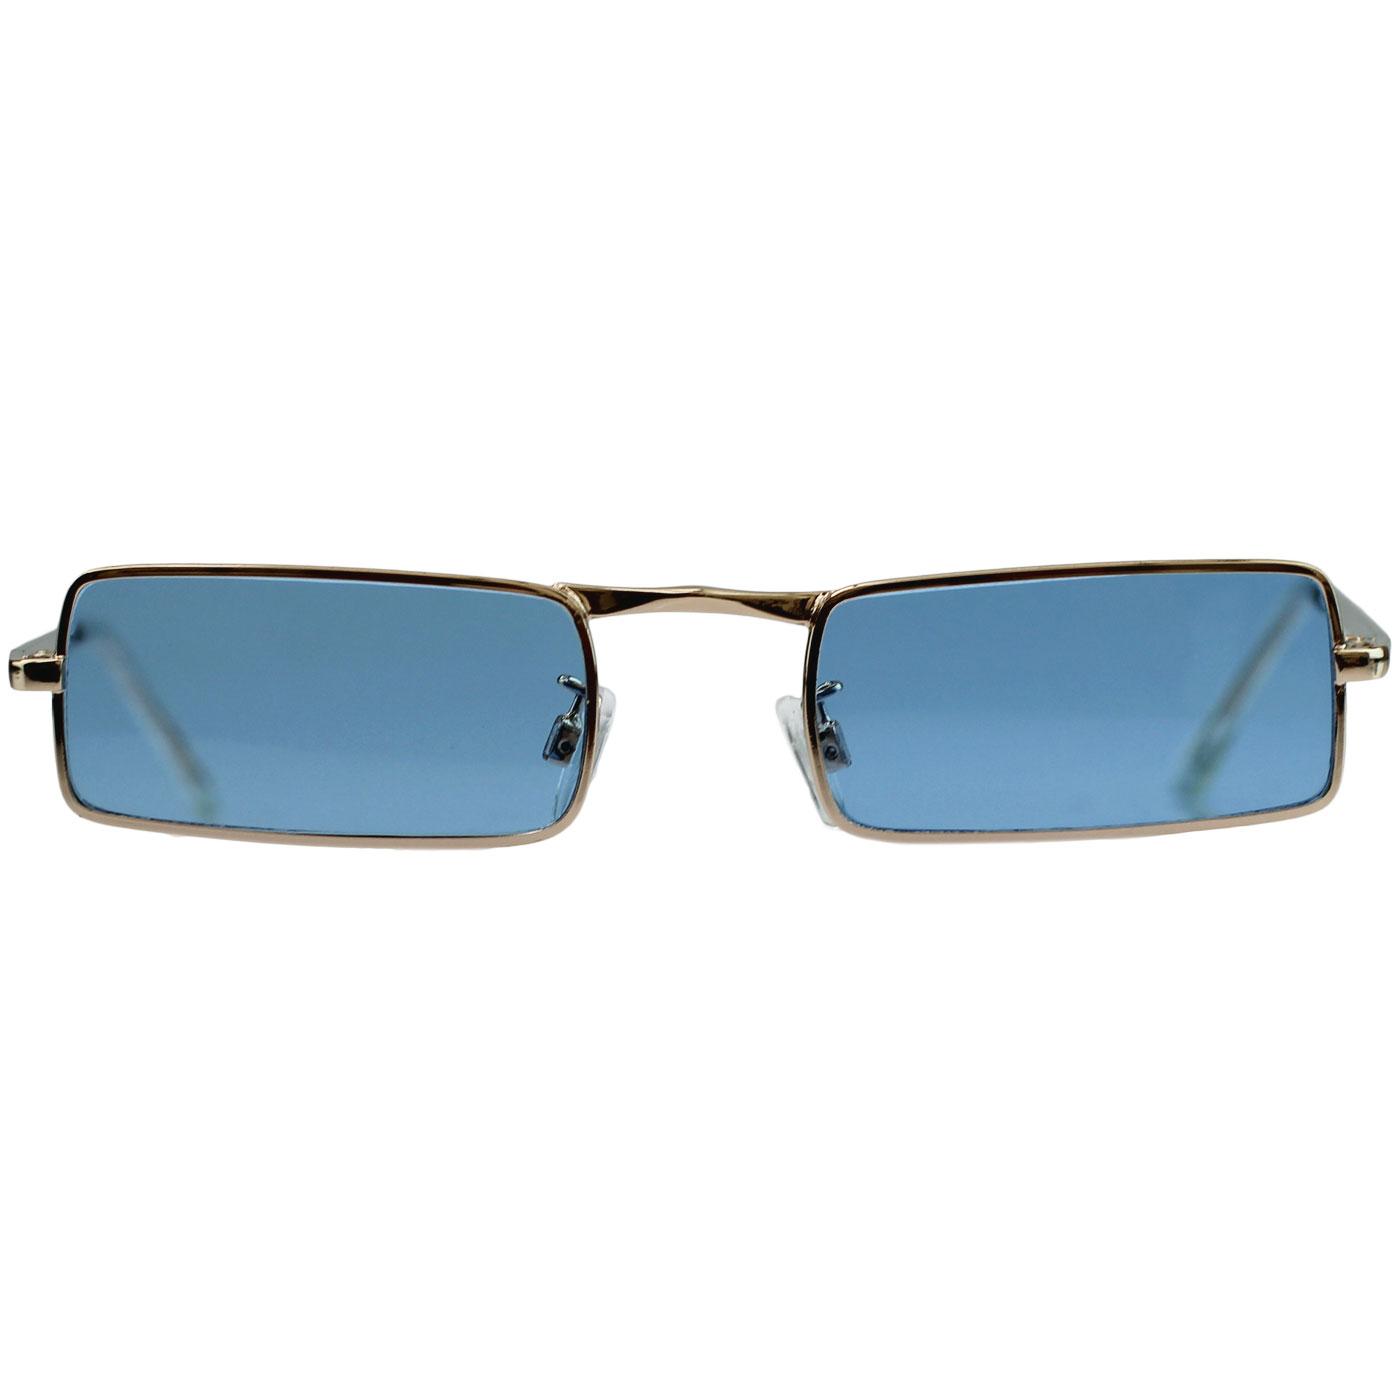 McGuinn MADCAP ENGLAND 1960s Granny Glasses BLUE